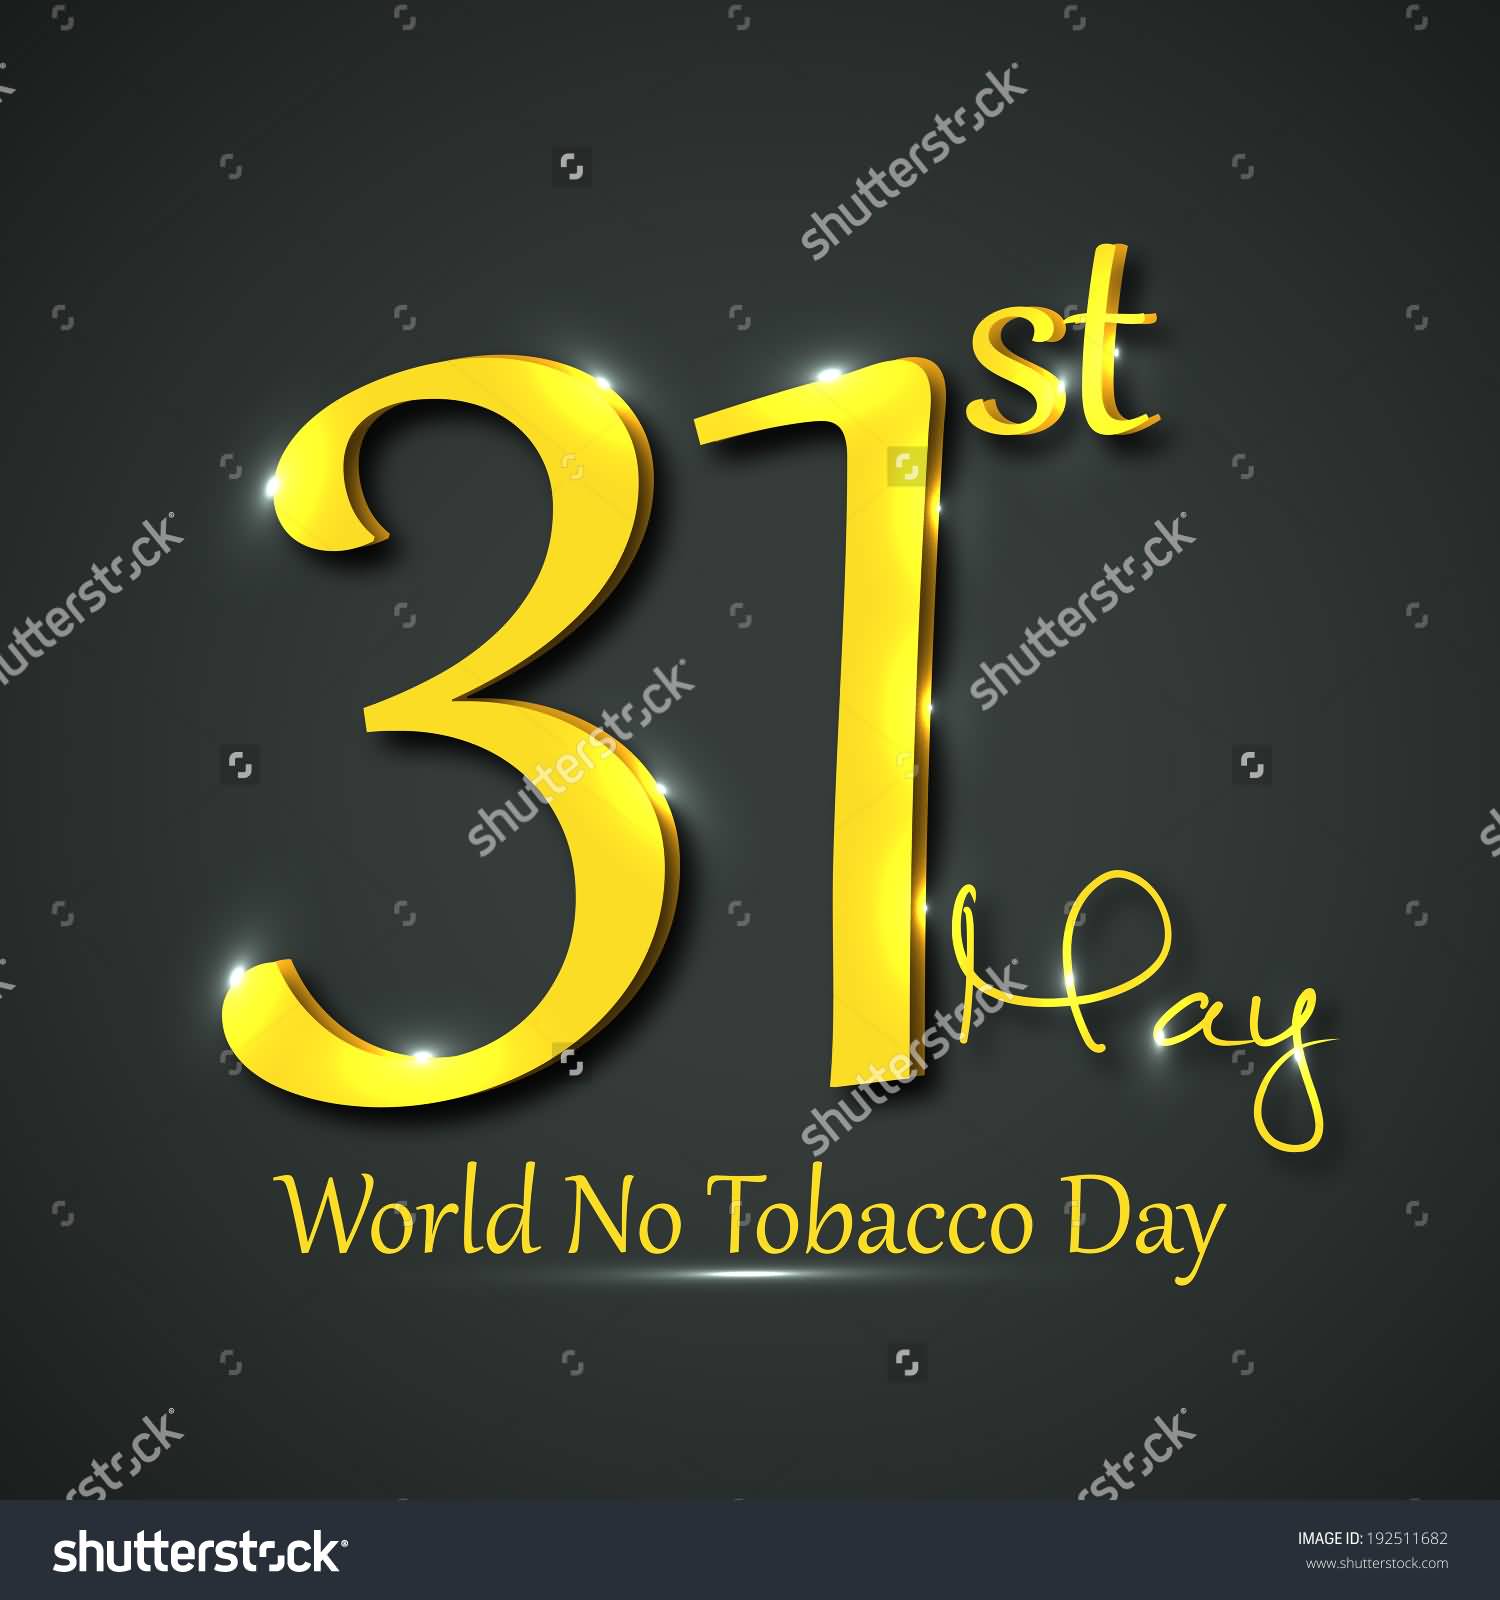 31st World No Tobacco Day Golden Text Illustration